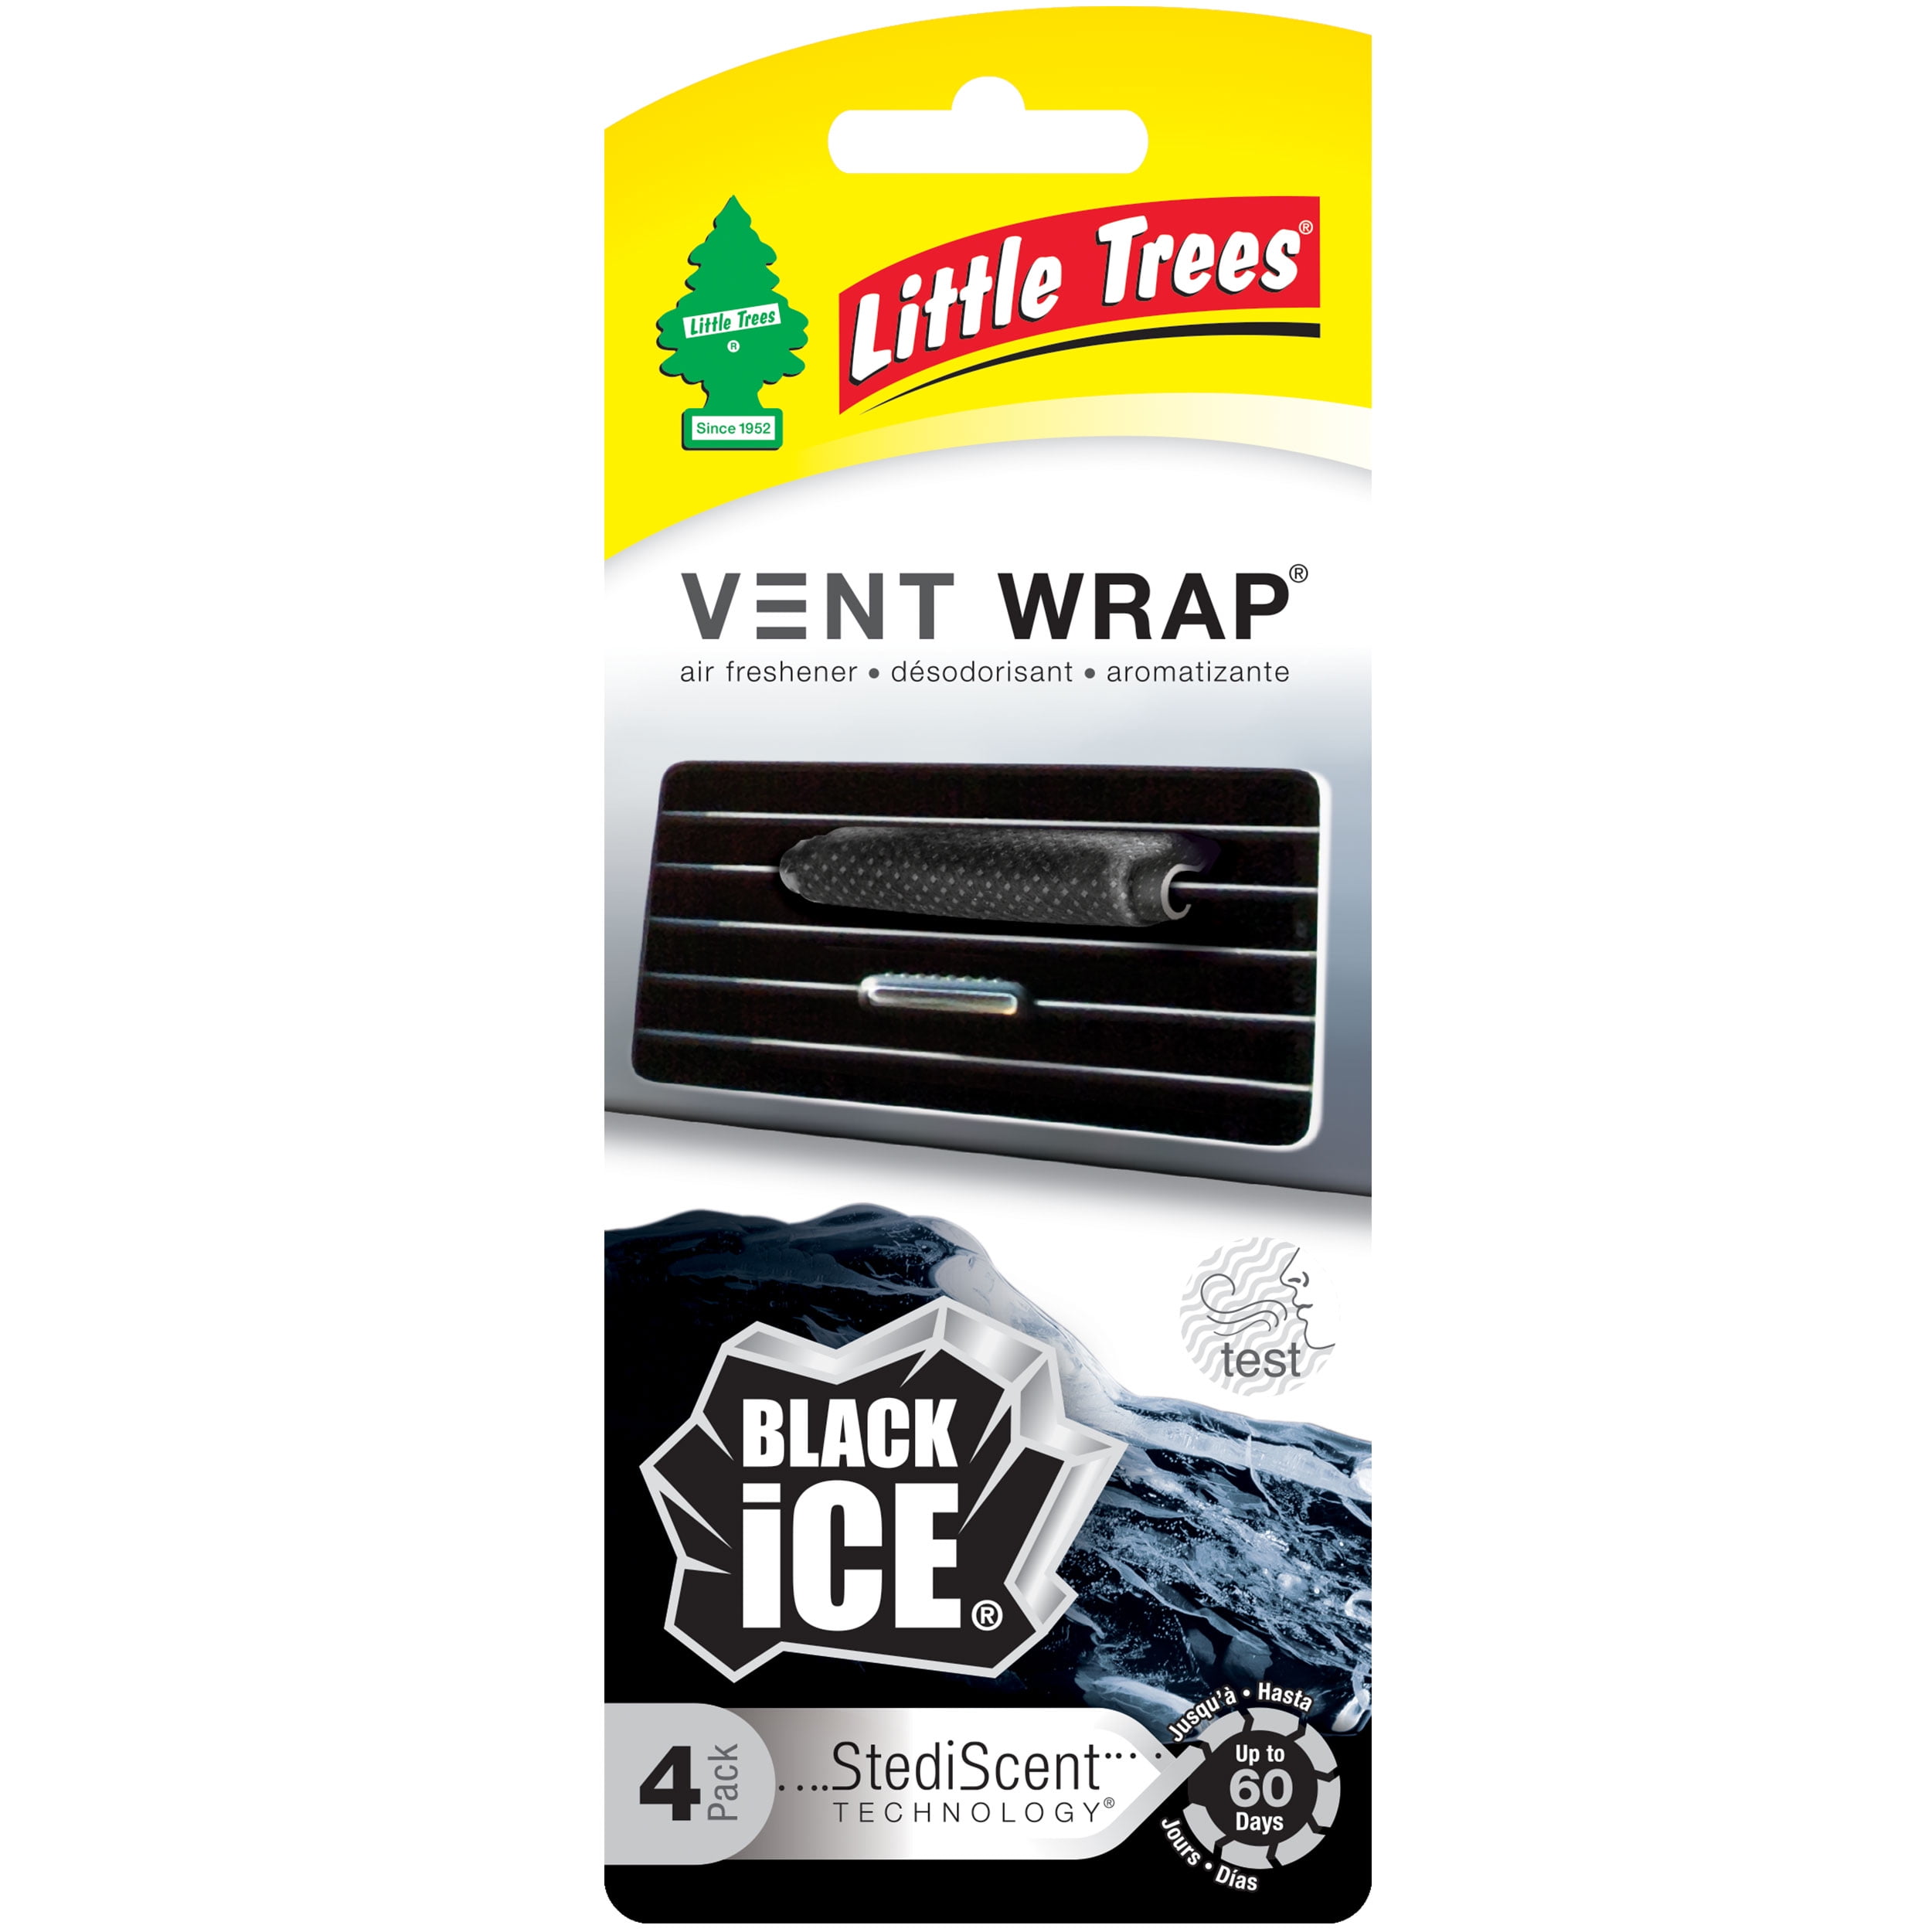 Little Trees Air Freshener, Black Ice, Vent Wrap, 4 Pack - 4 fresheners